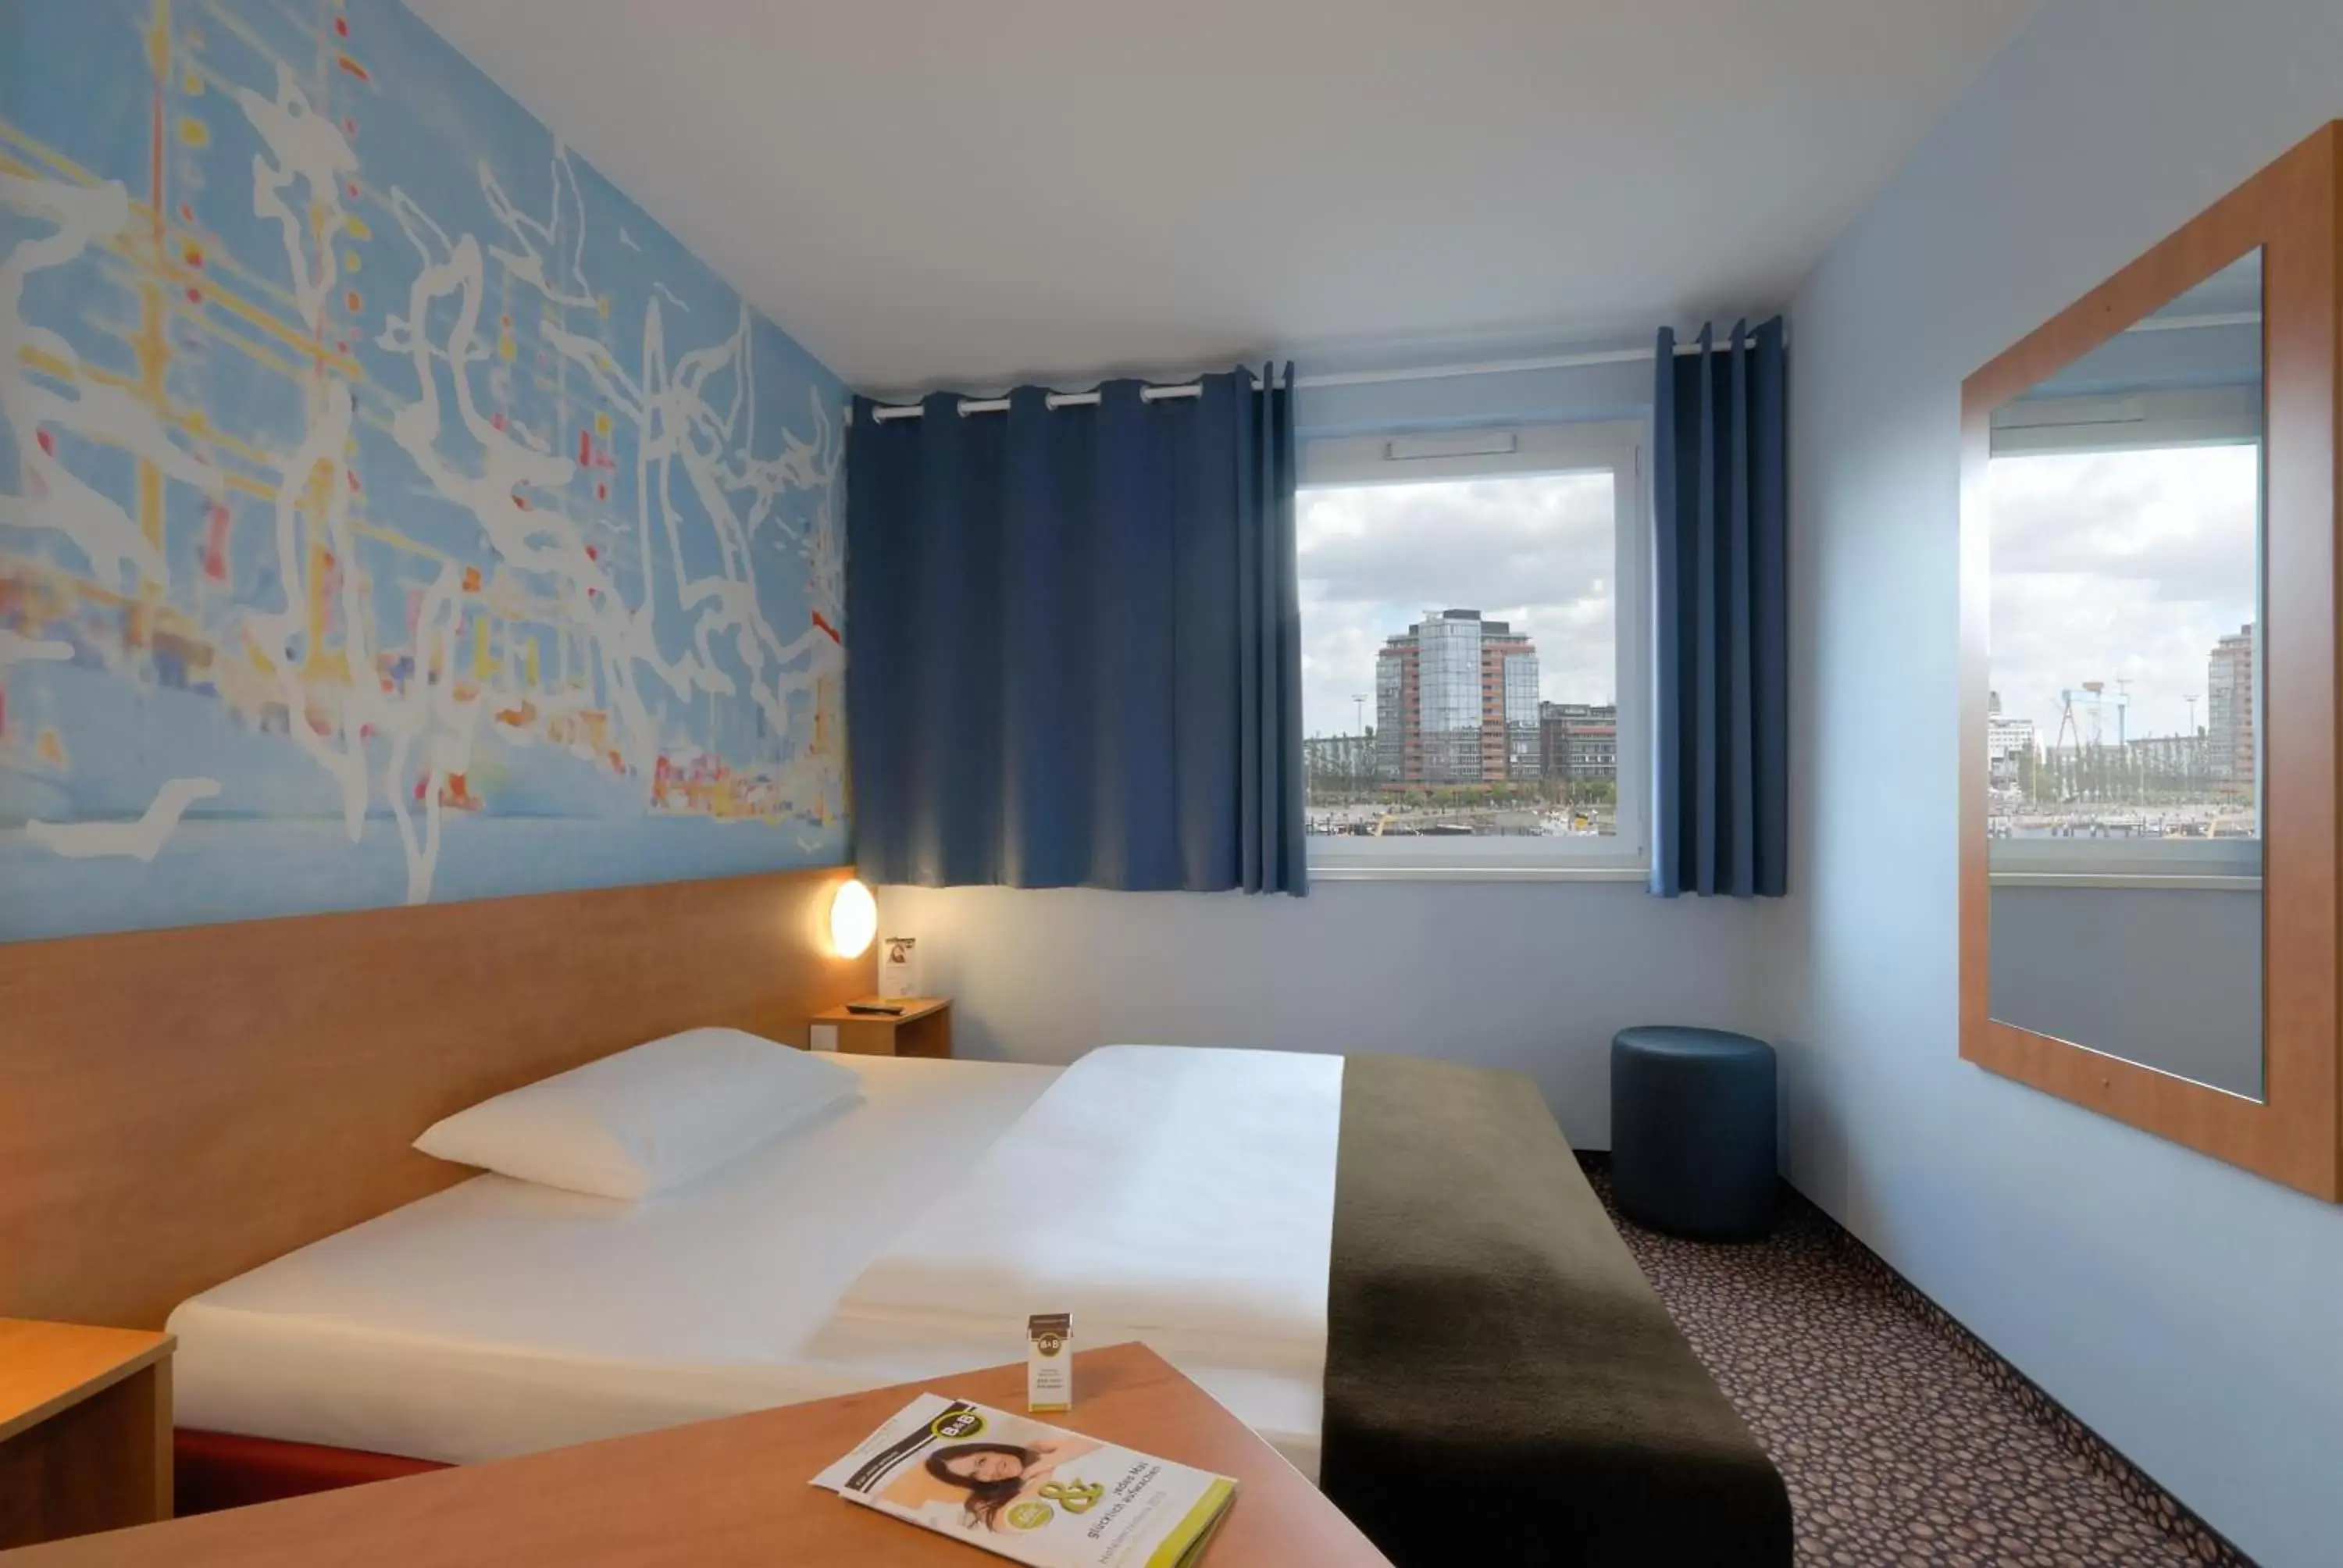 Photo of the whole room in B&B Hotel Kiel-City